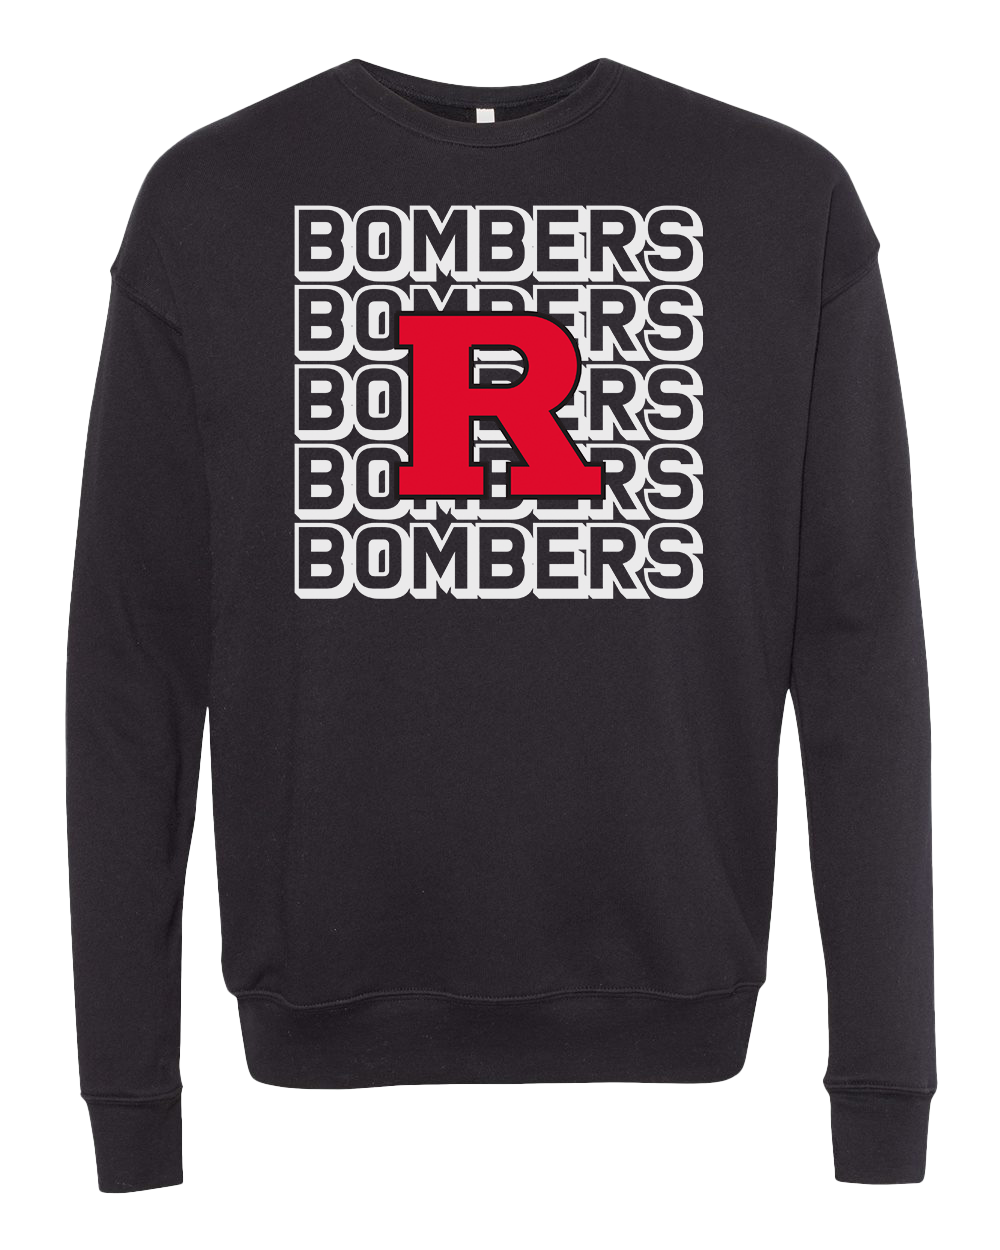 Rensselaer Central Bombers Repeat Crew Sweatshirt - Black